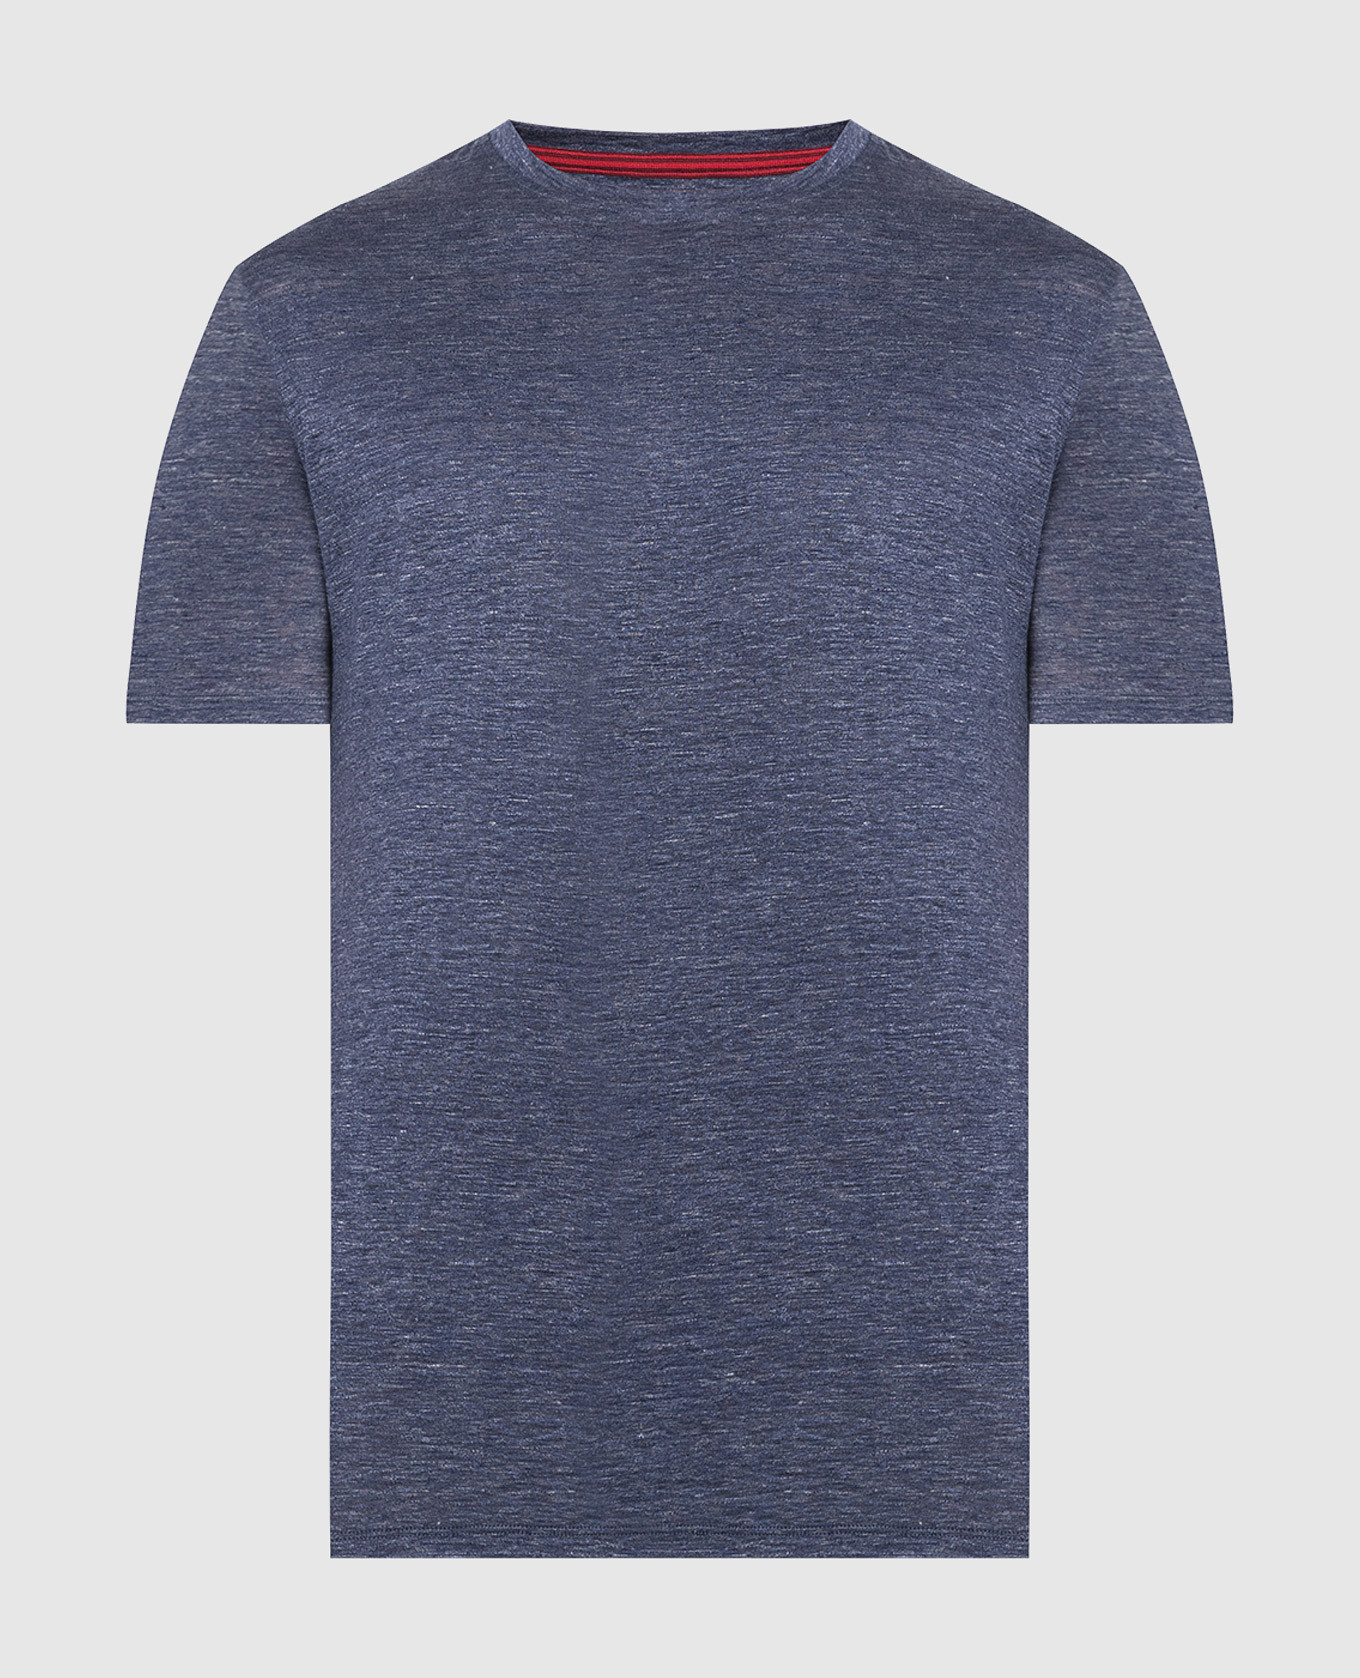 Blue melange linen t-shirt